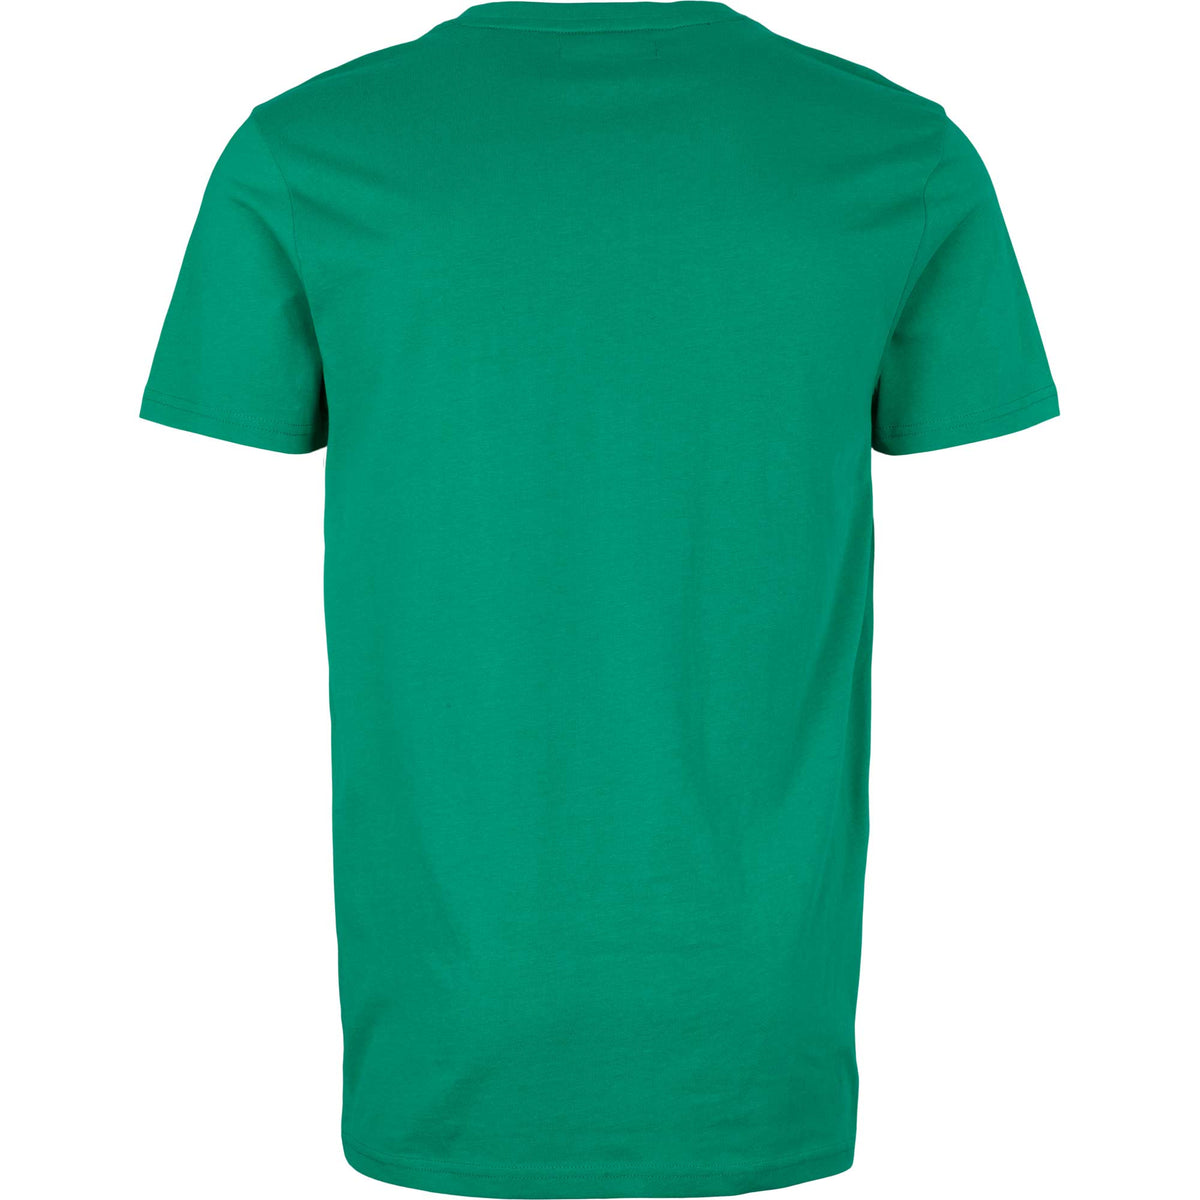 USPA T-Shirt V-Neck Cem Men - Golf Green